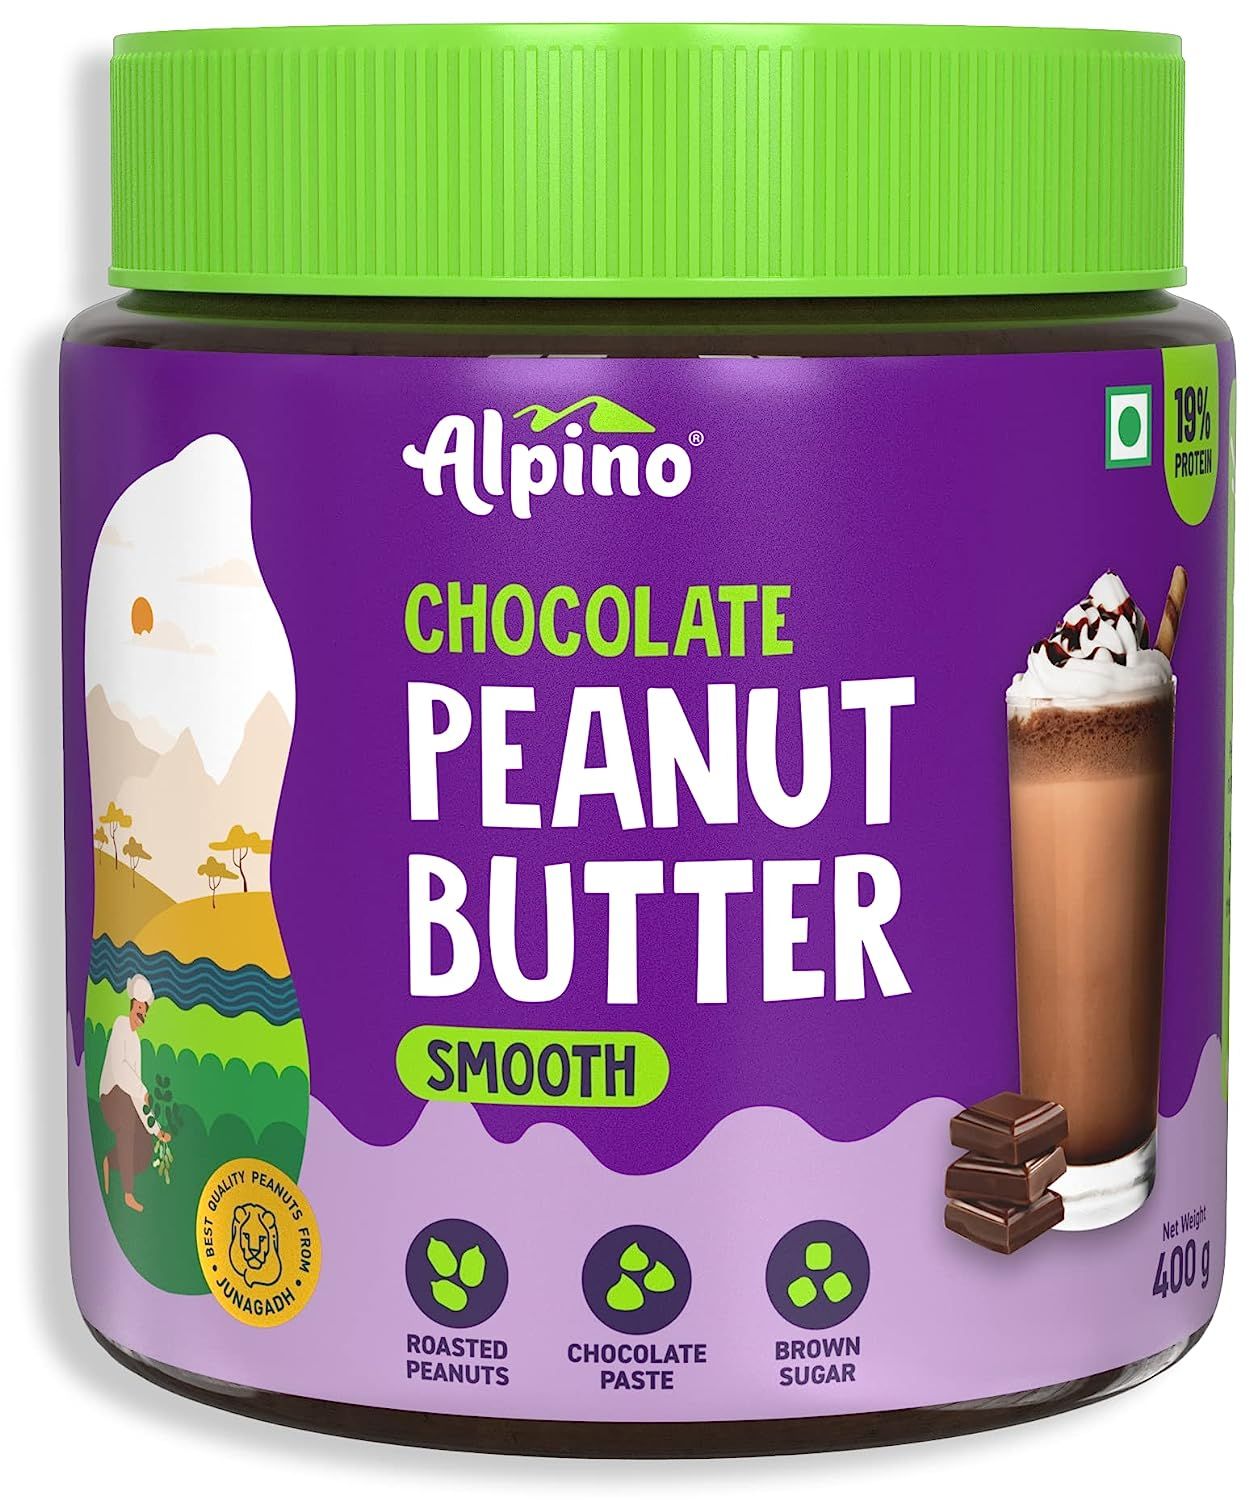 Alpino Chocolate Peanut Butter Smooth Image